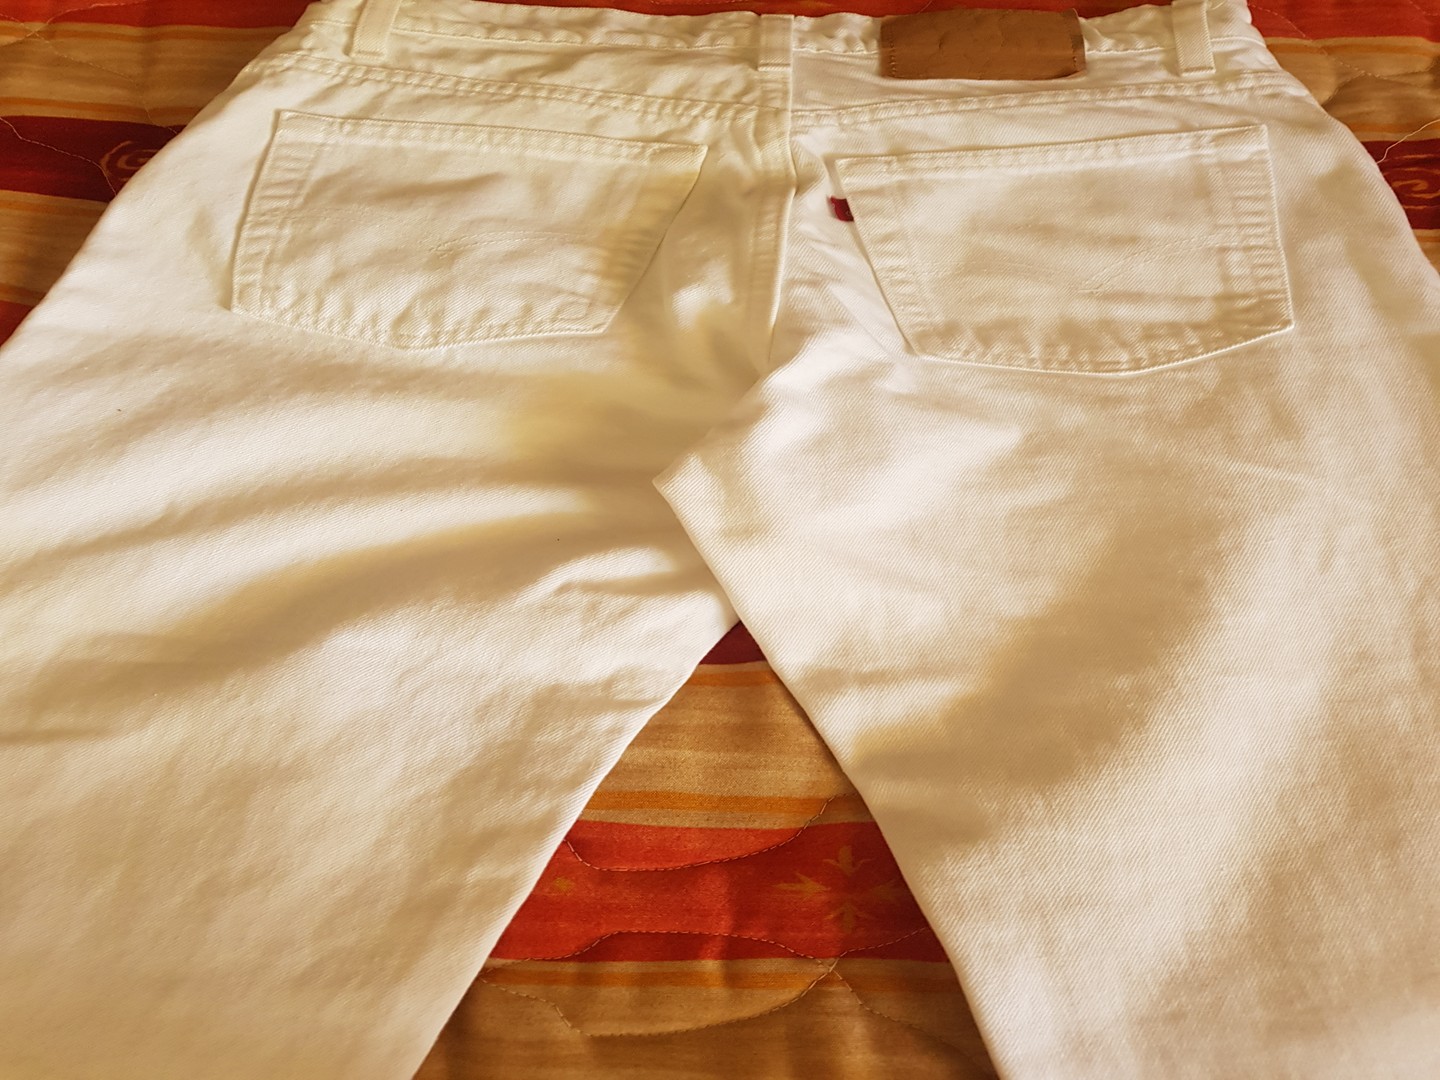 Pantalón blanco tela de jeans de algodón, marca Levi's. 1